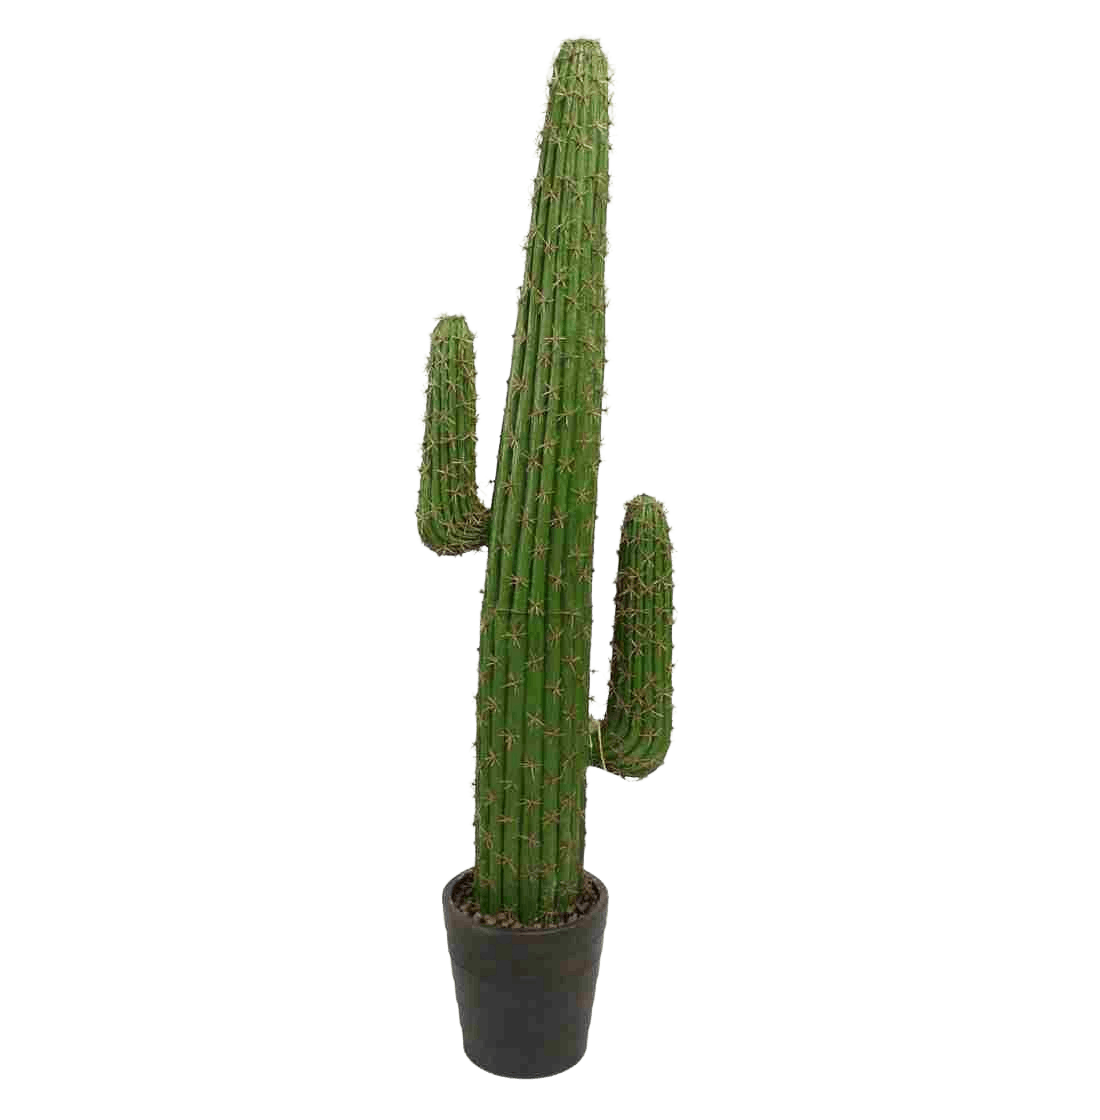 Artificial saguaro cactus